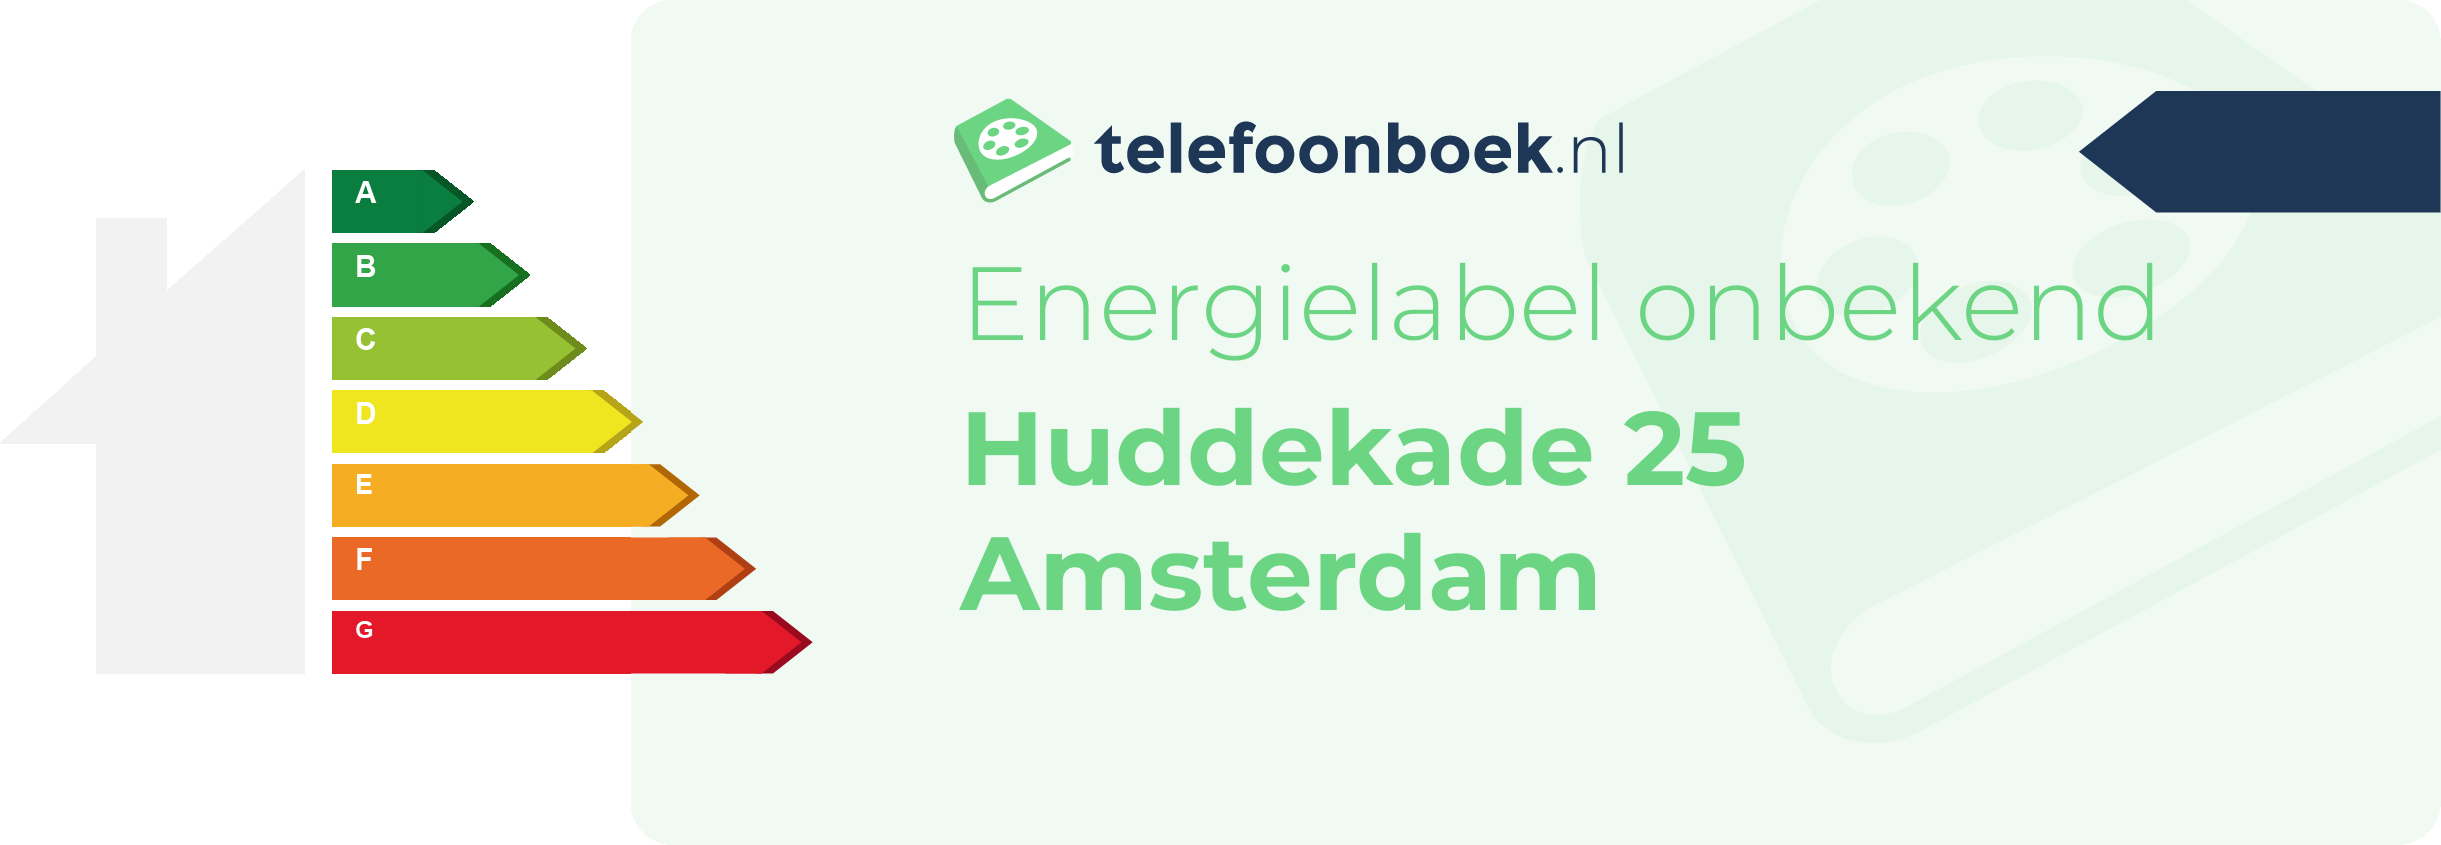 Energielabel Huddekade 25 Amsterdam